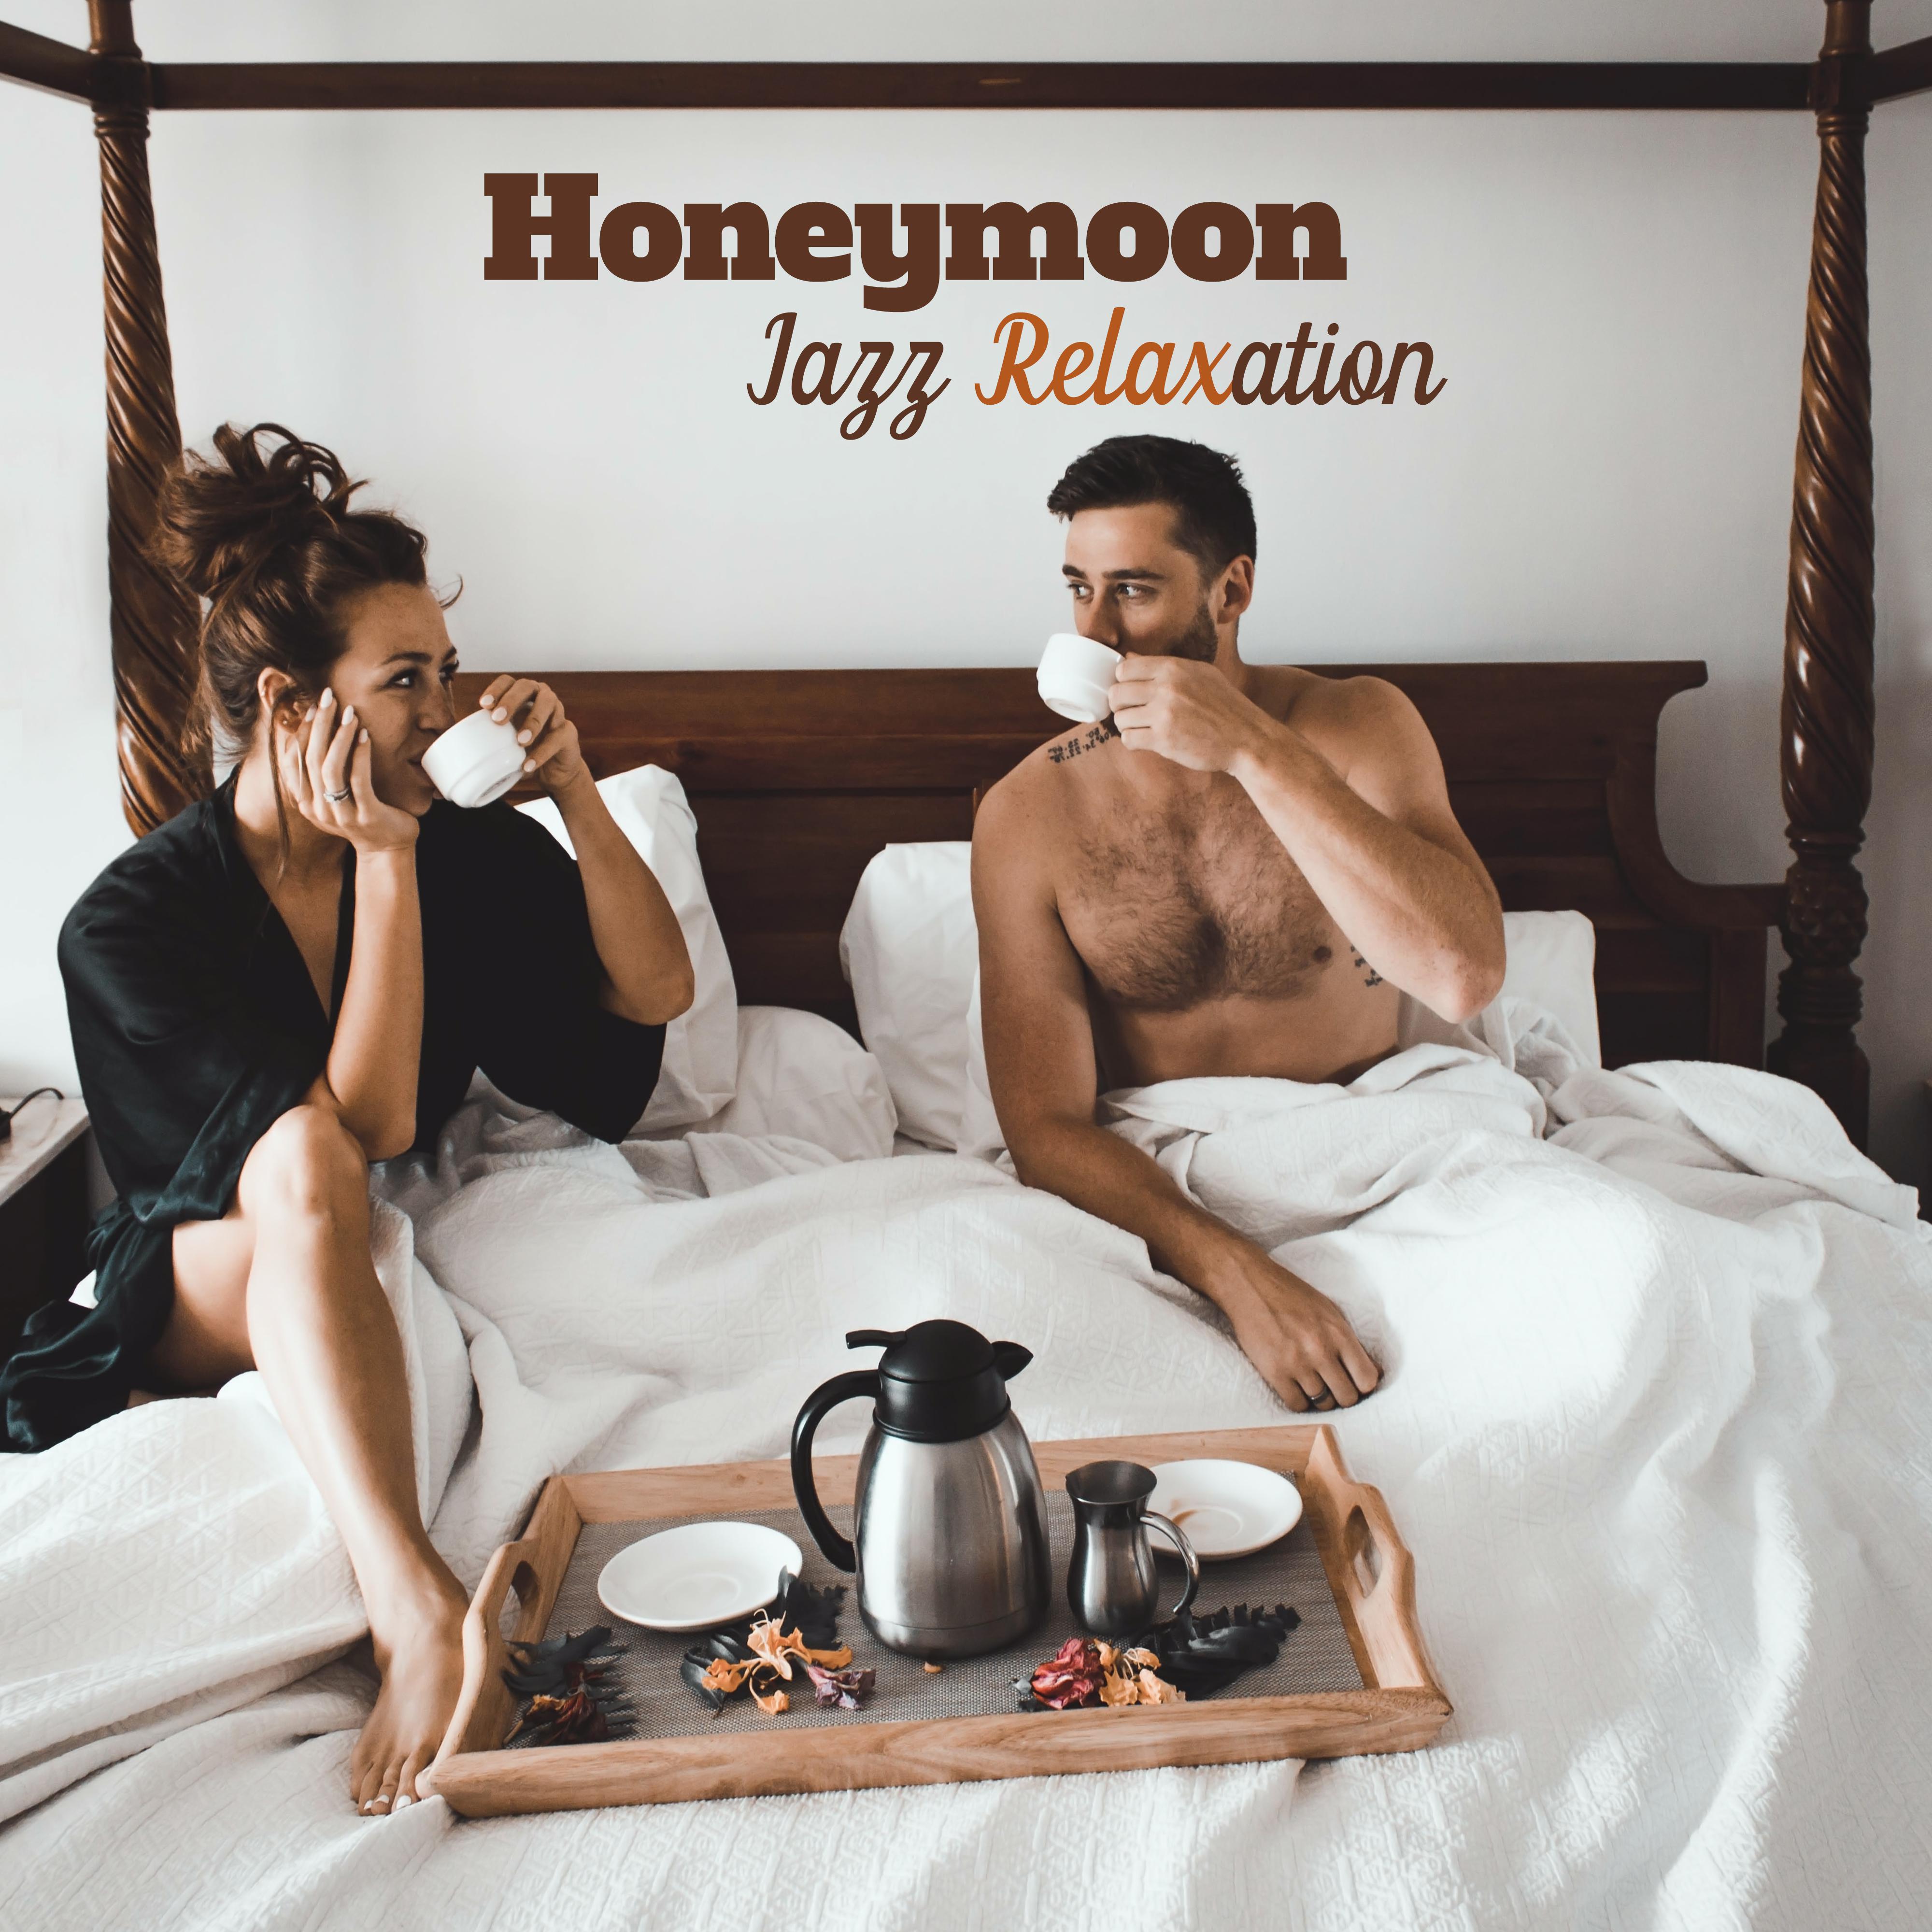 Honeymoon Jazz Relaxation